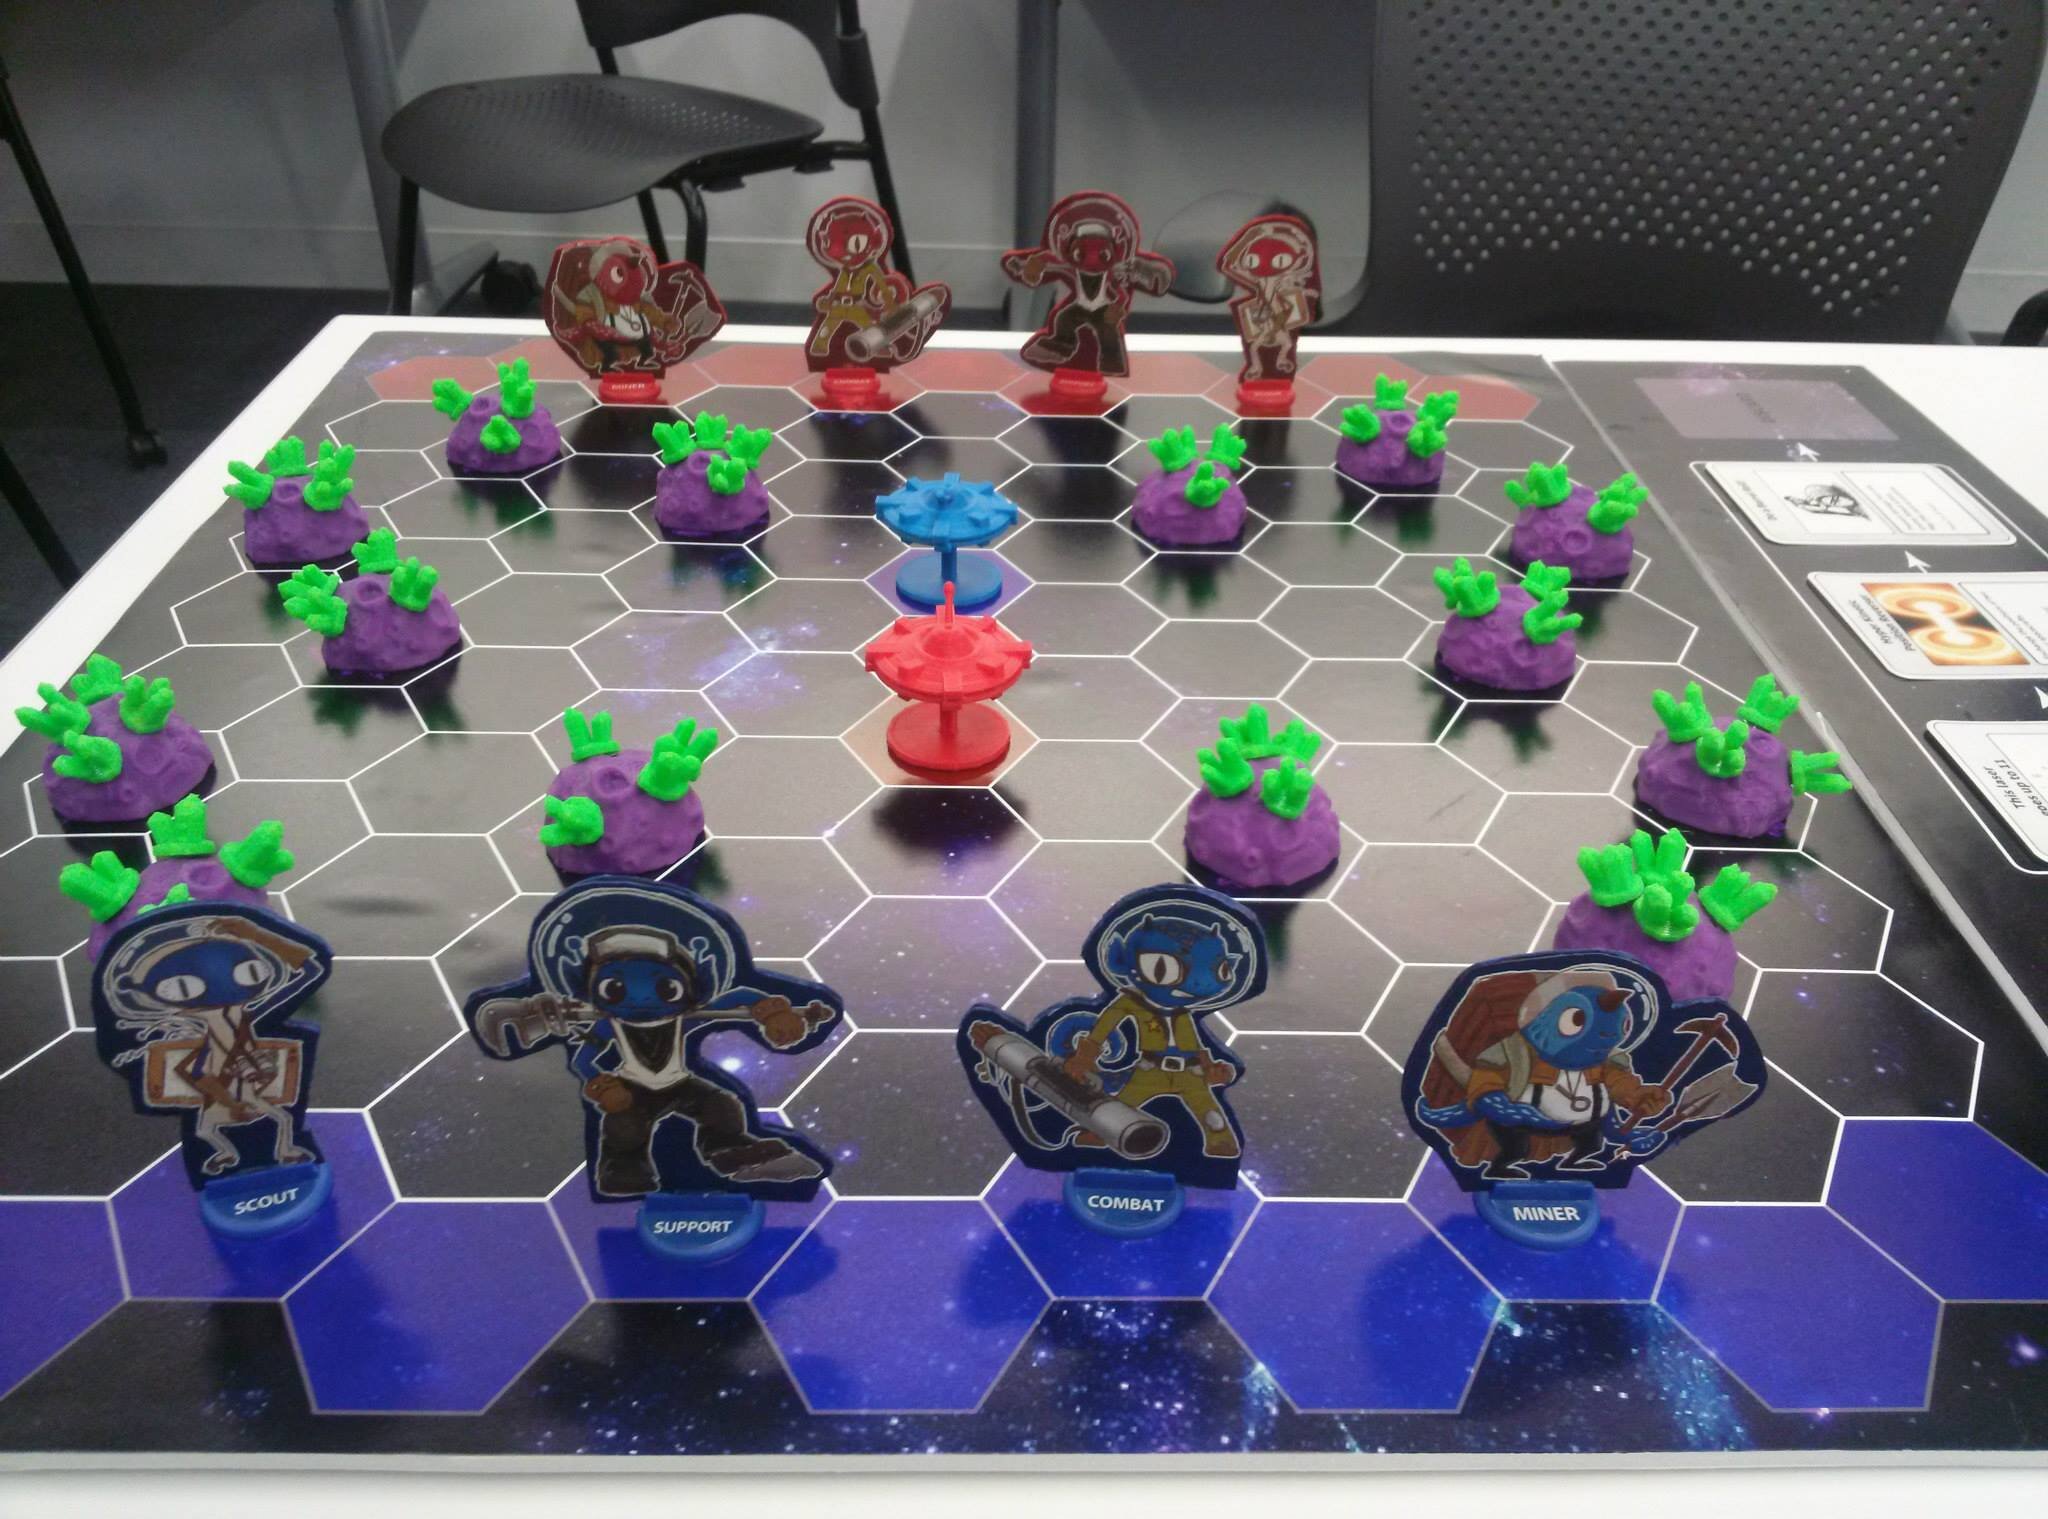 Intergalactic Requce Squad board game in gard school .jpg